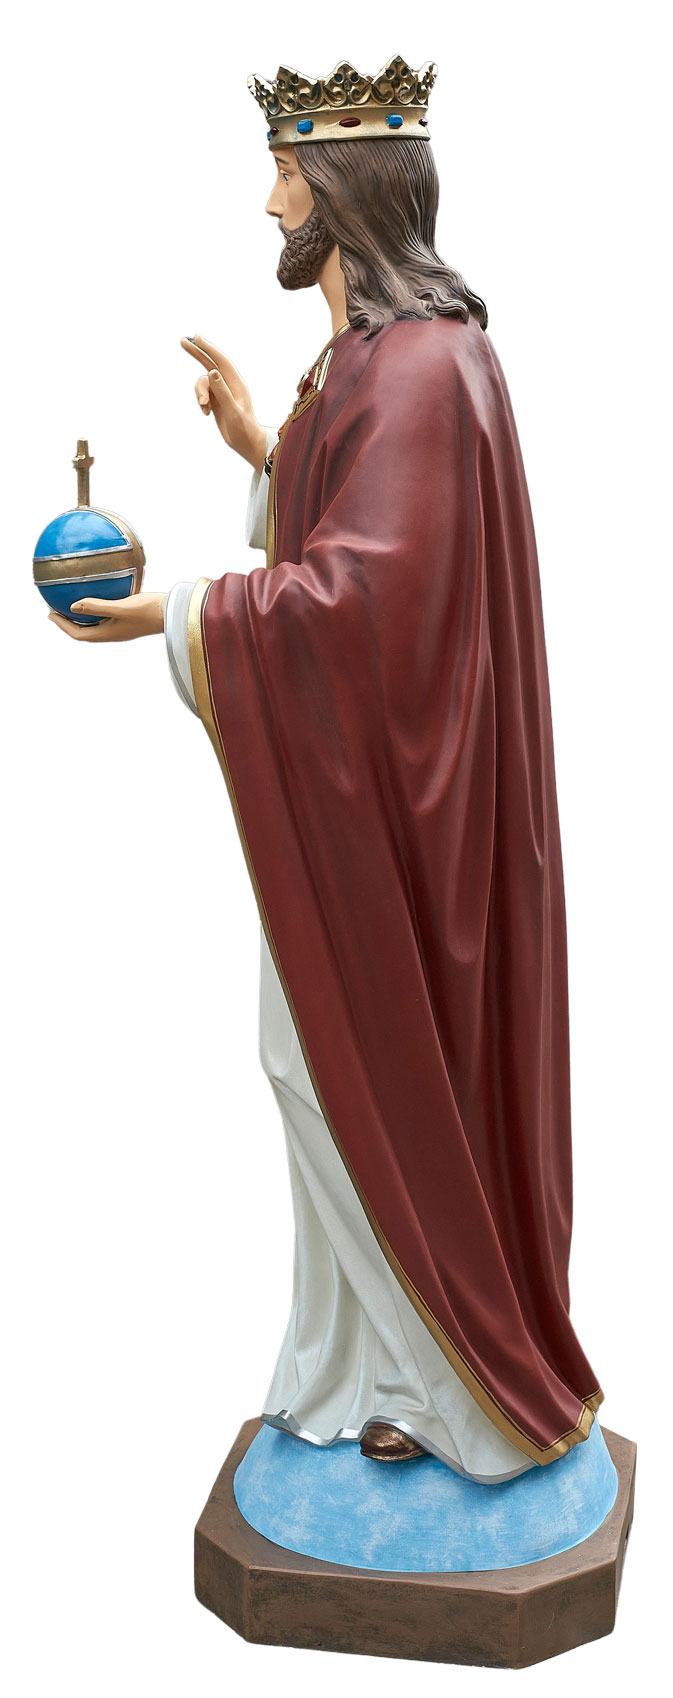 Chrystus Król - Figura nagrobna - 155 cm - R 42